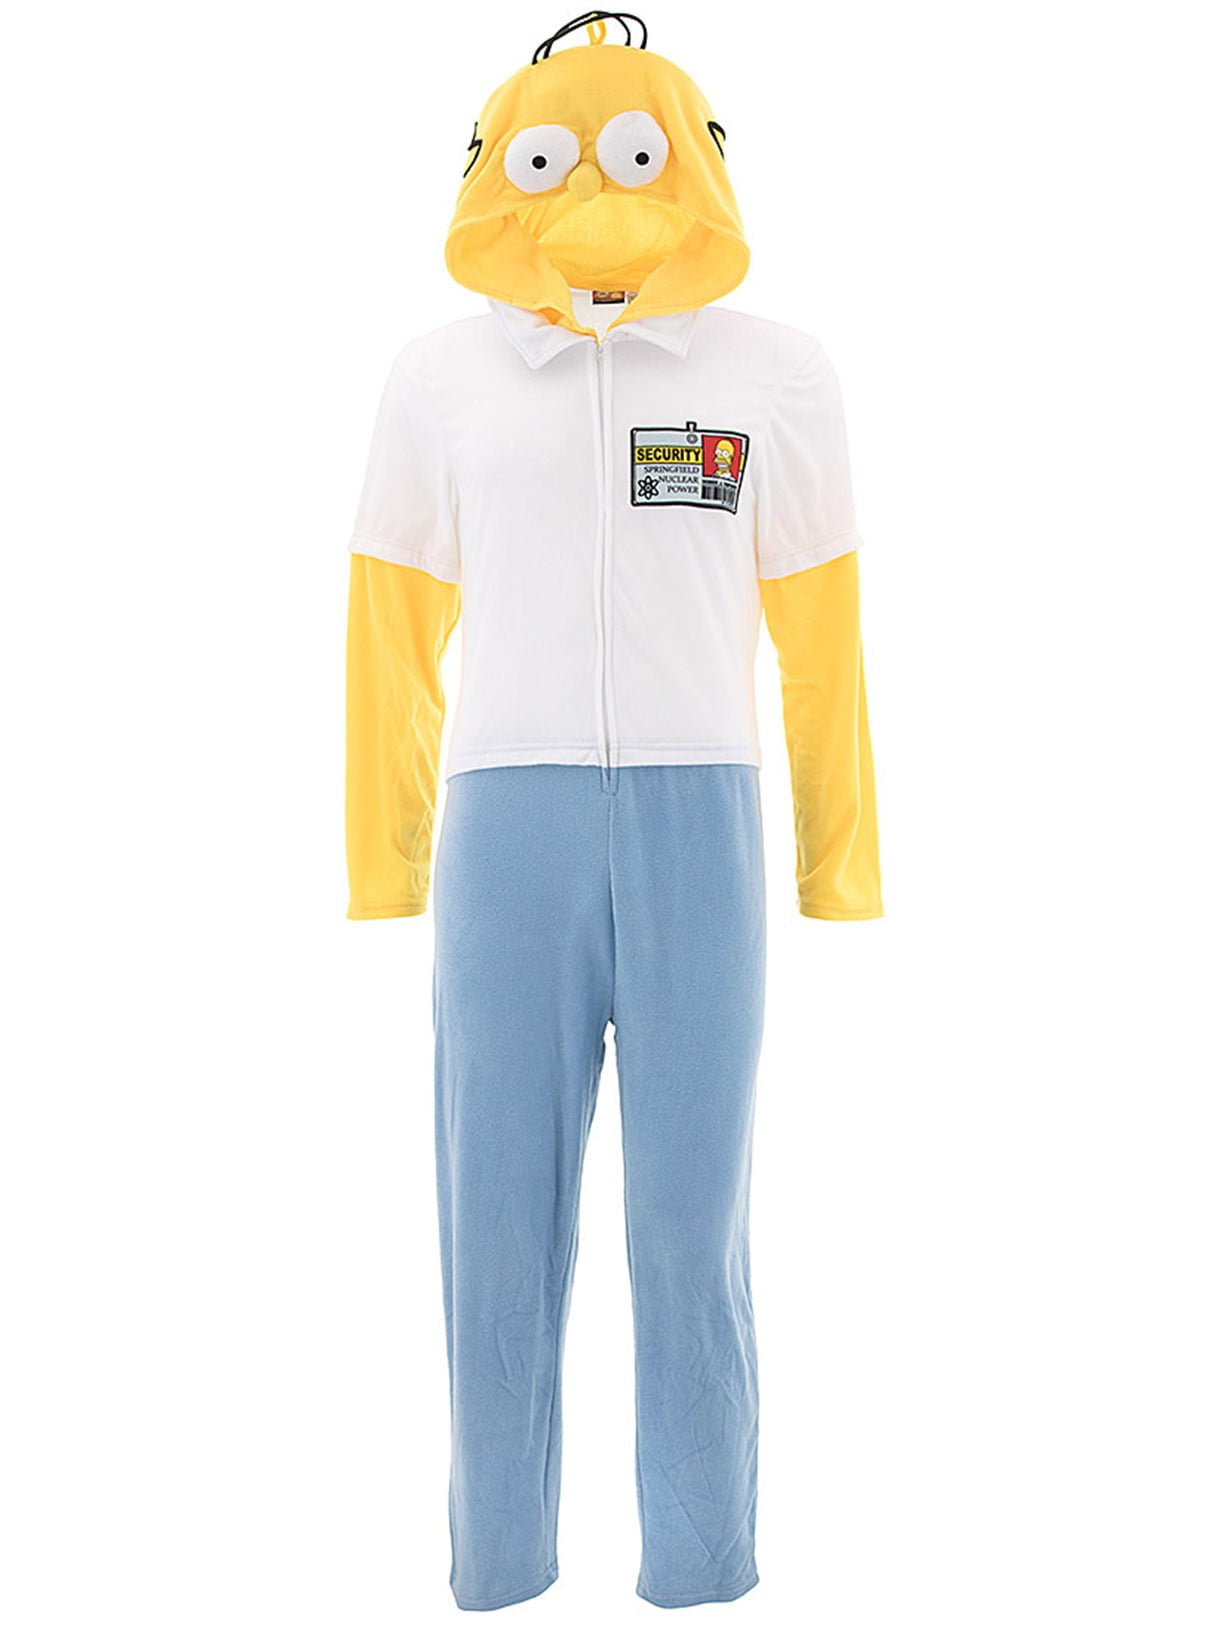 Homer Simpson Adult Hooded Union Suit. homer pajamas. 